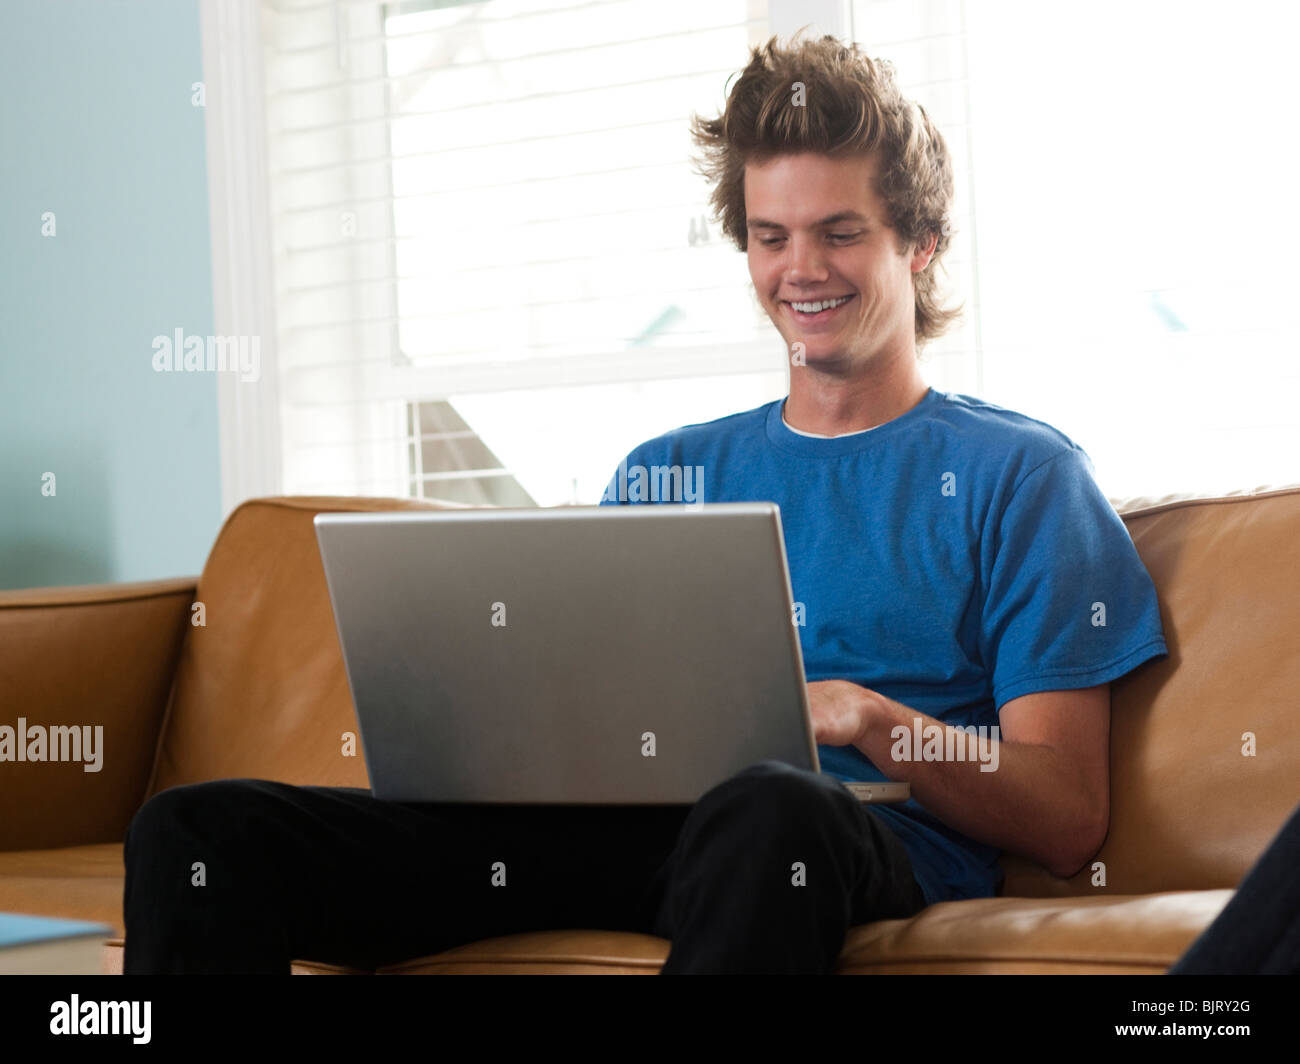 USA, Utah, Provo, young man sitting on sofa and using laptop Stock Photo